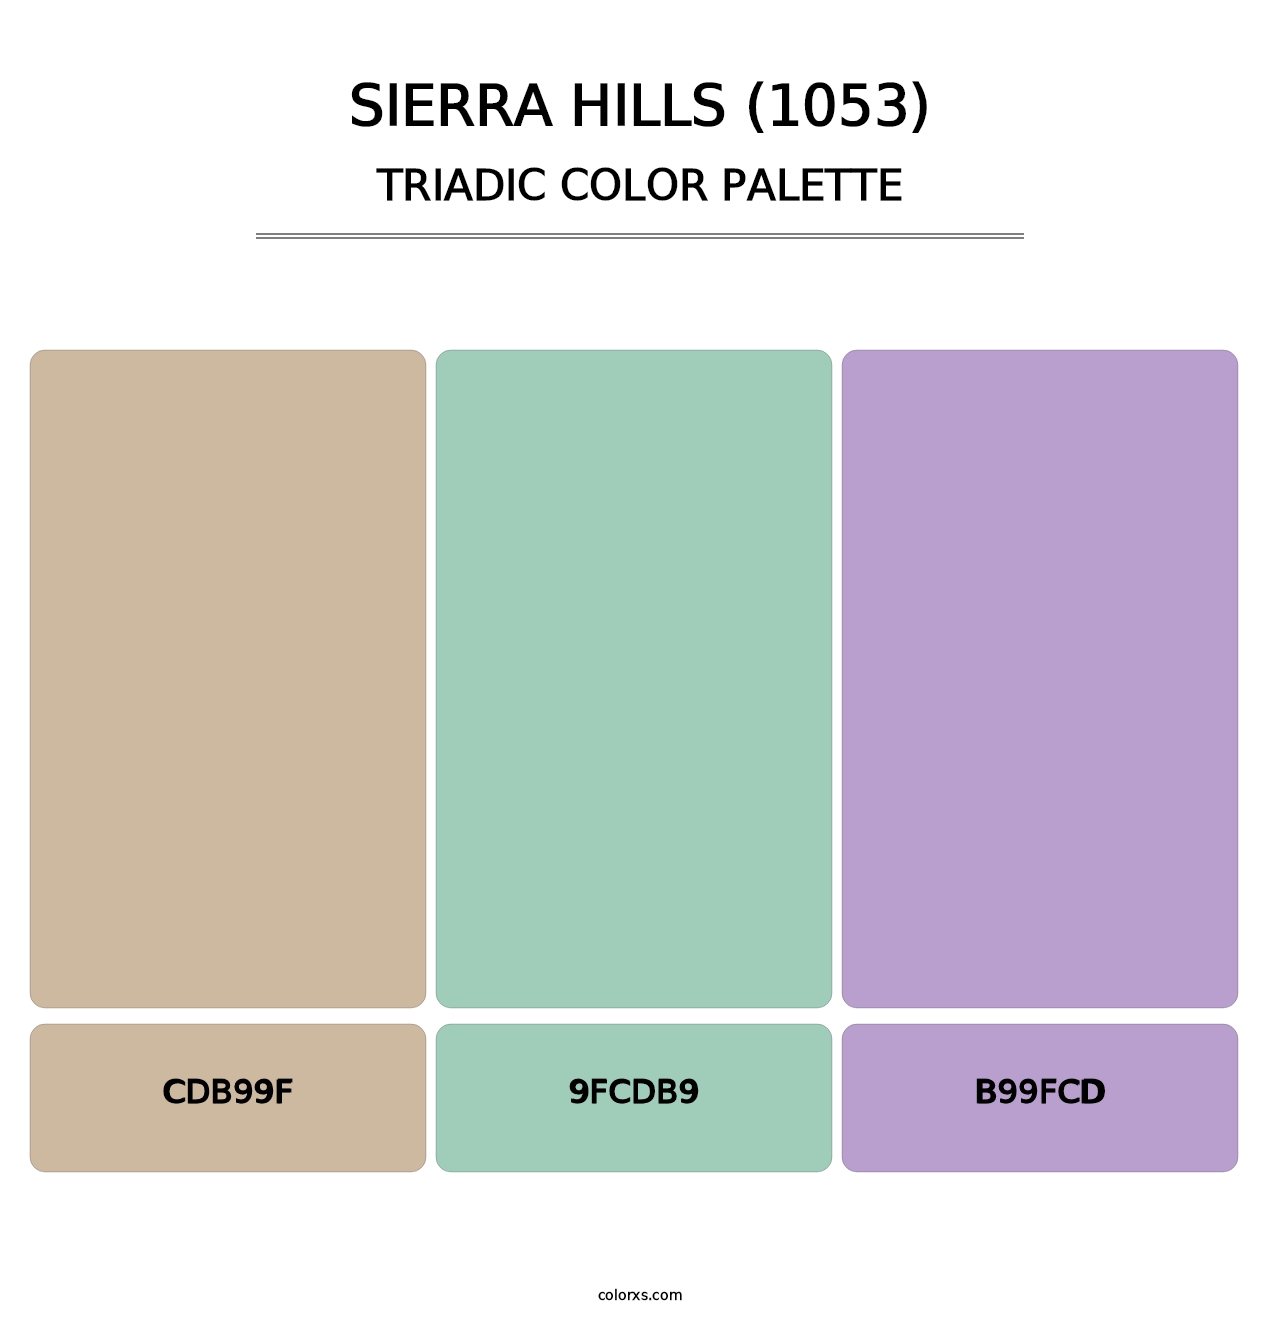 Sierra Hills (1053) - Triadic Color Palette